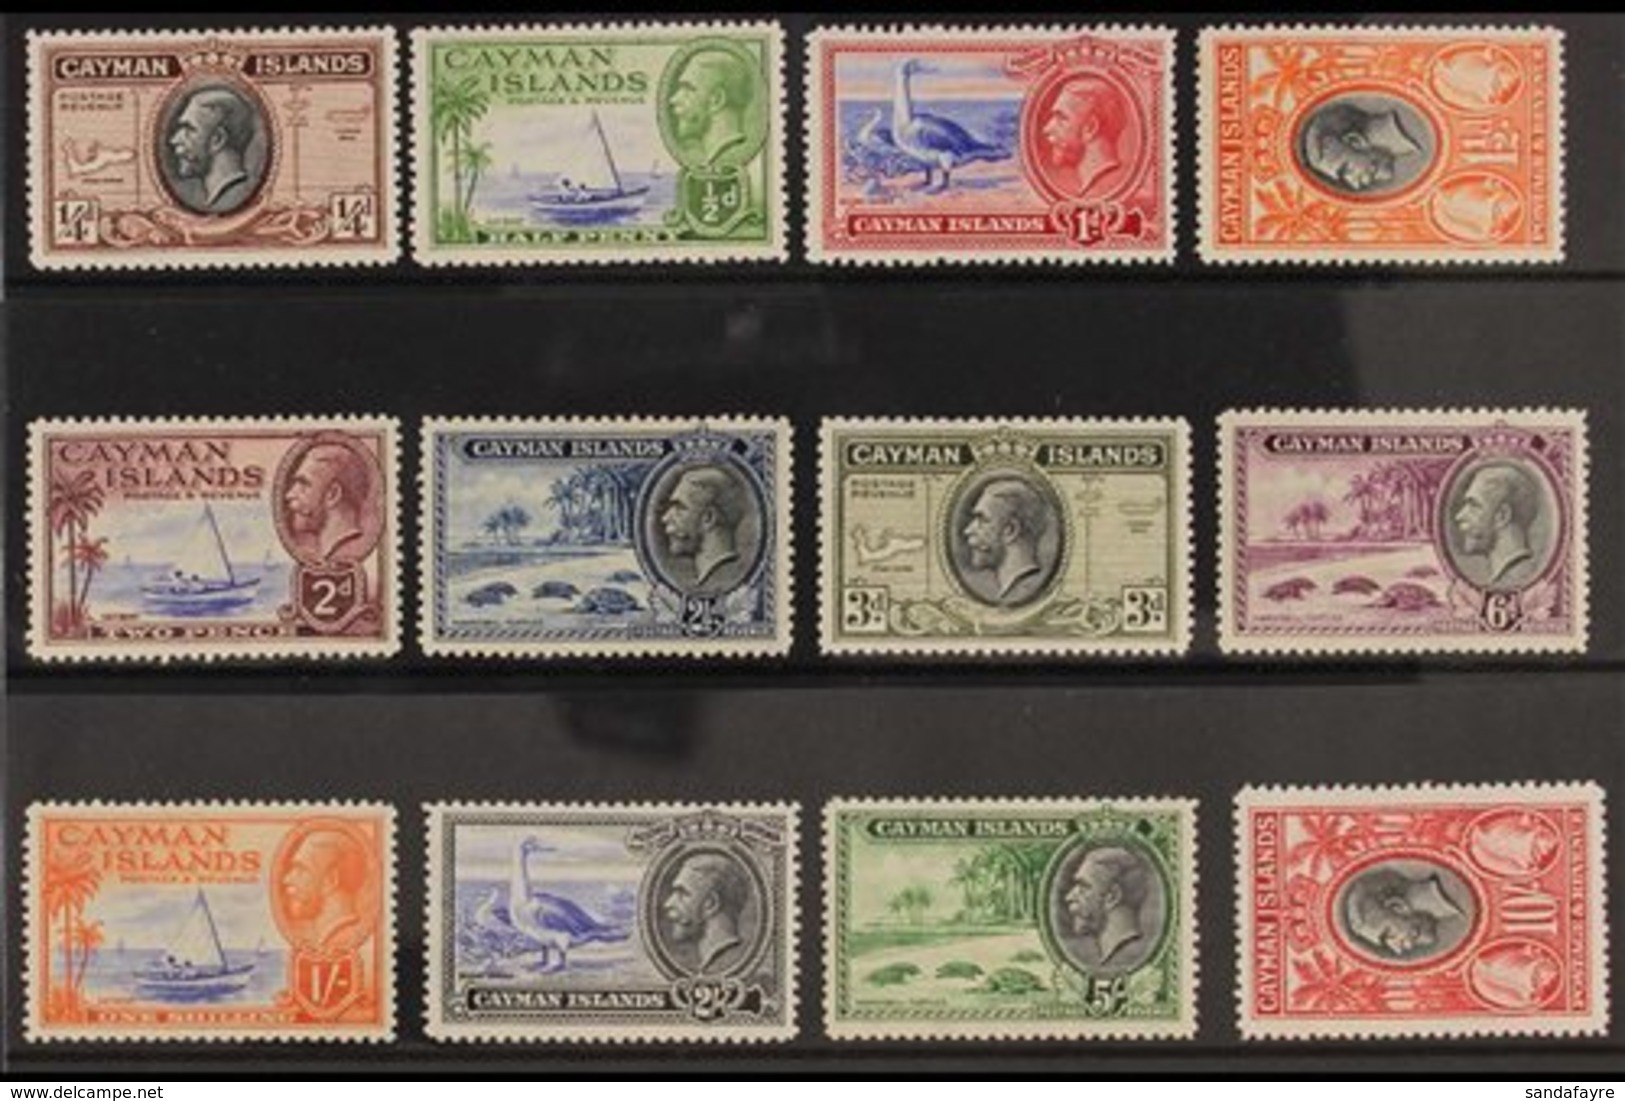 1935 KGV Pictorial Set Complete, SG 96/107, Very Fine Mint With Vibrant Colours (12 Stamps) For More Images, Please Visi - Iles Caïmans